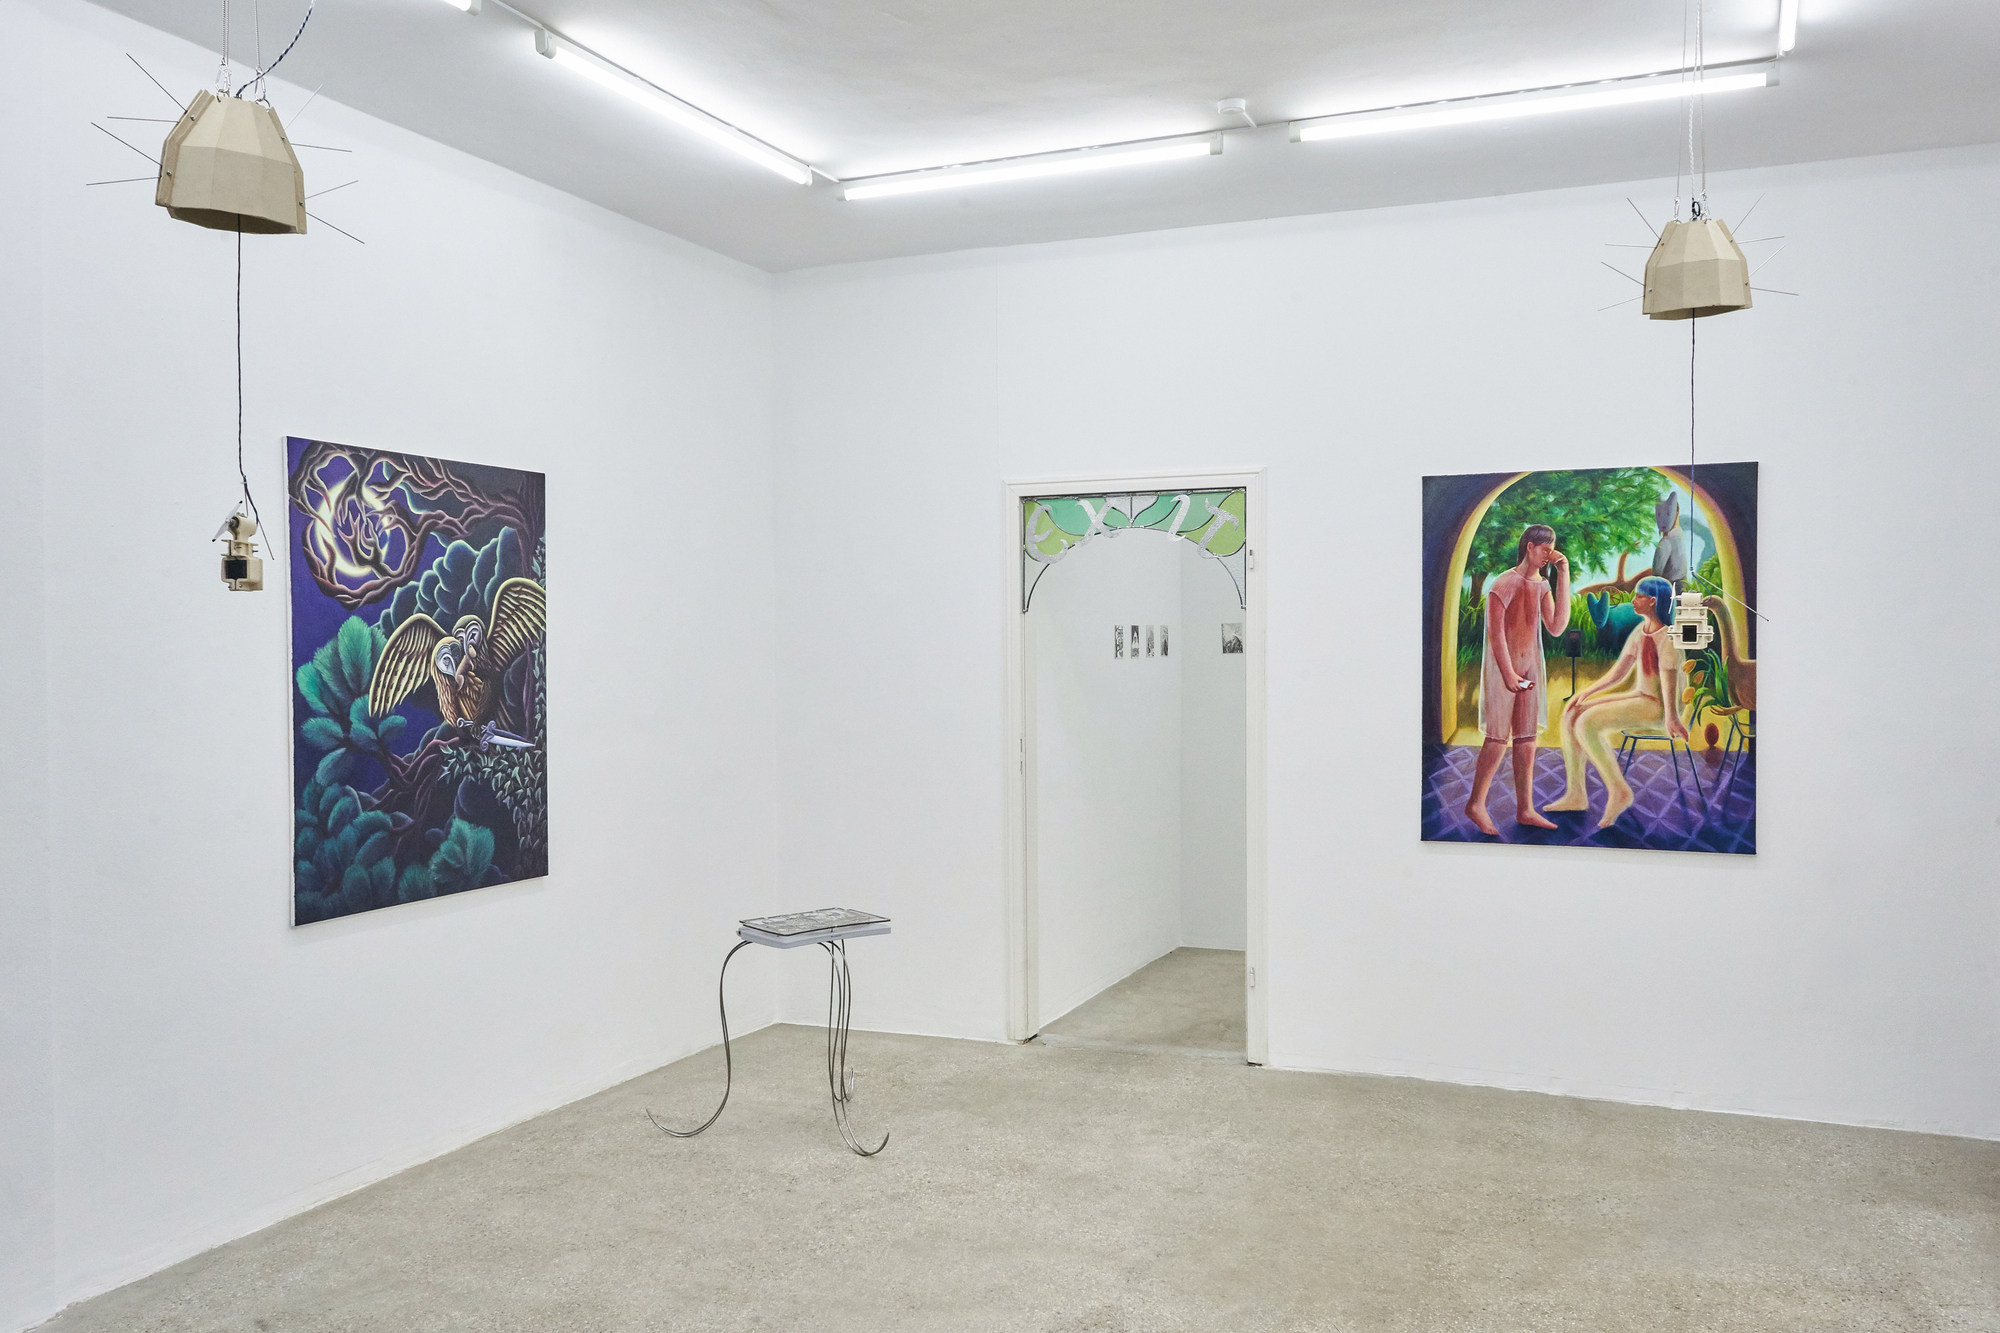 Exhibition view: works by Hannah Hyun Jeong, Ju Young Kim, Younsik Kim and Jimmy Vuong